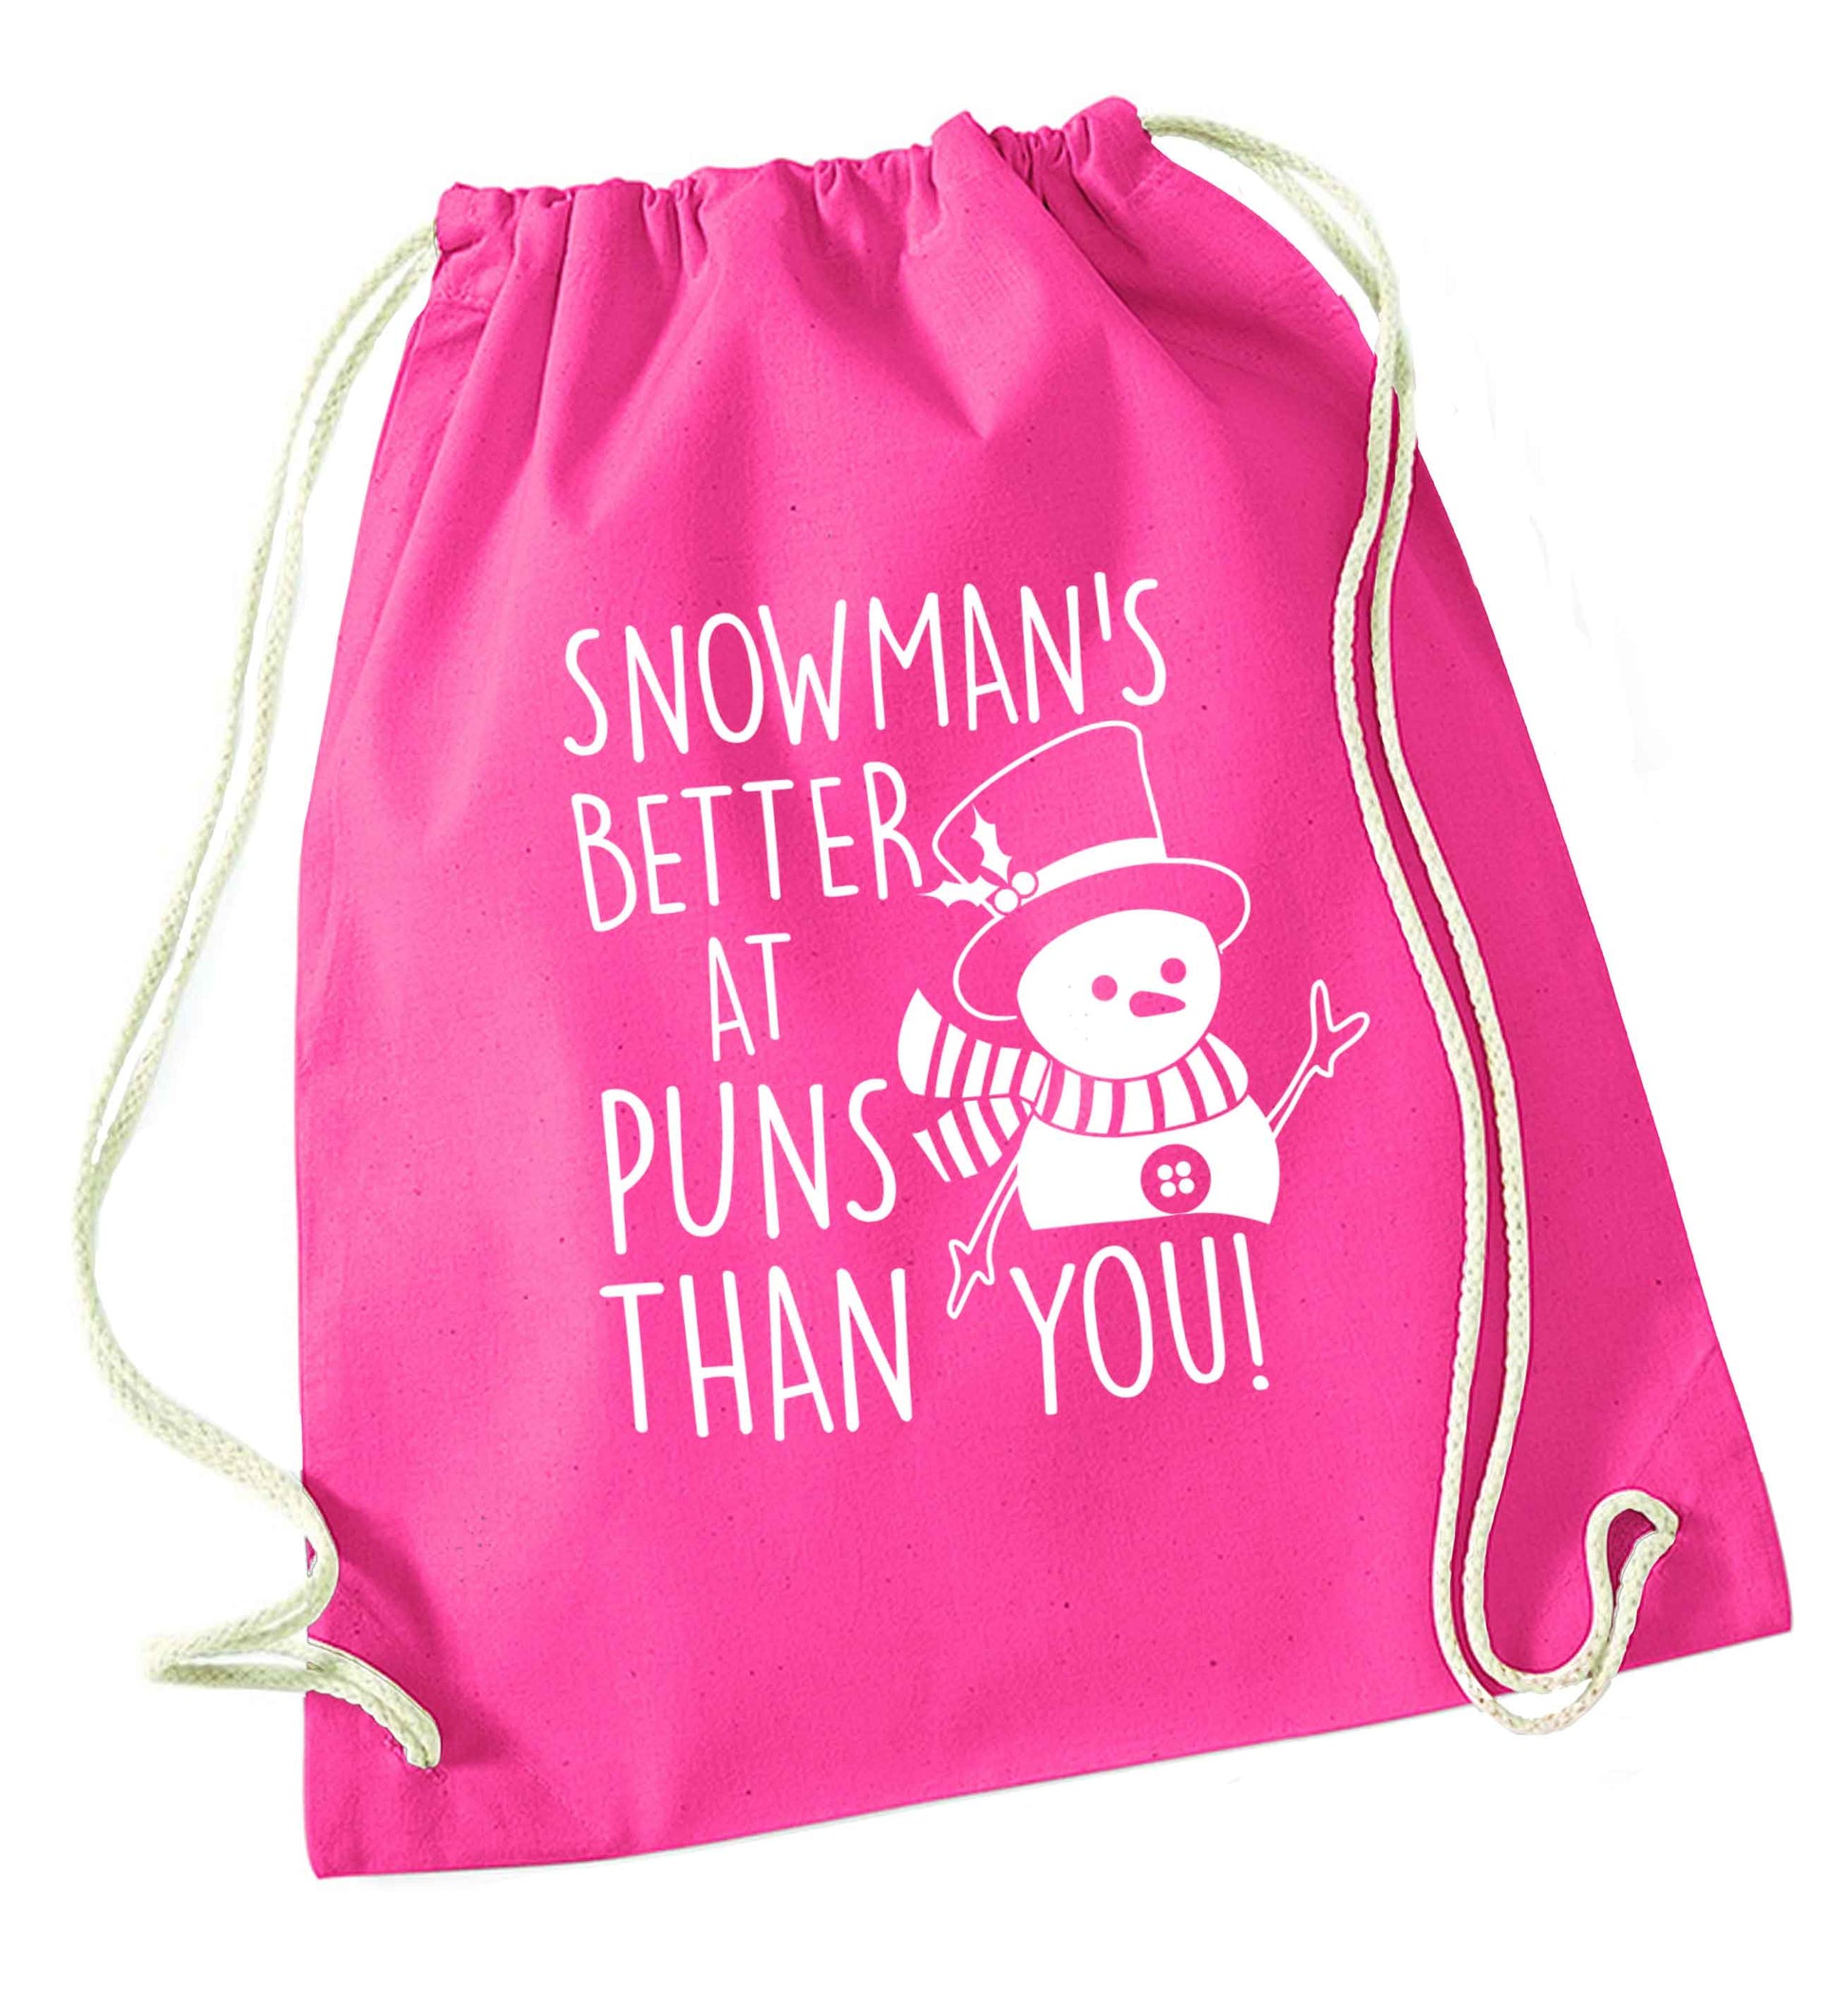 Snowman's Puns You pink drawstring bag